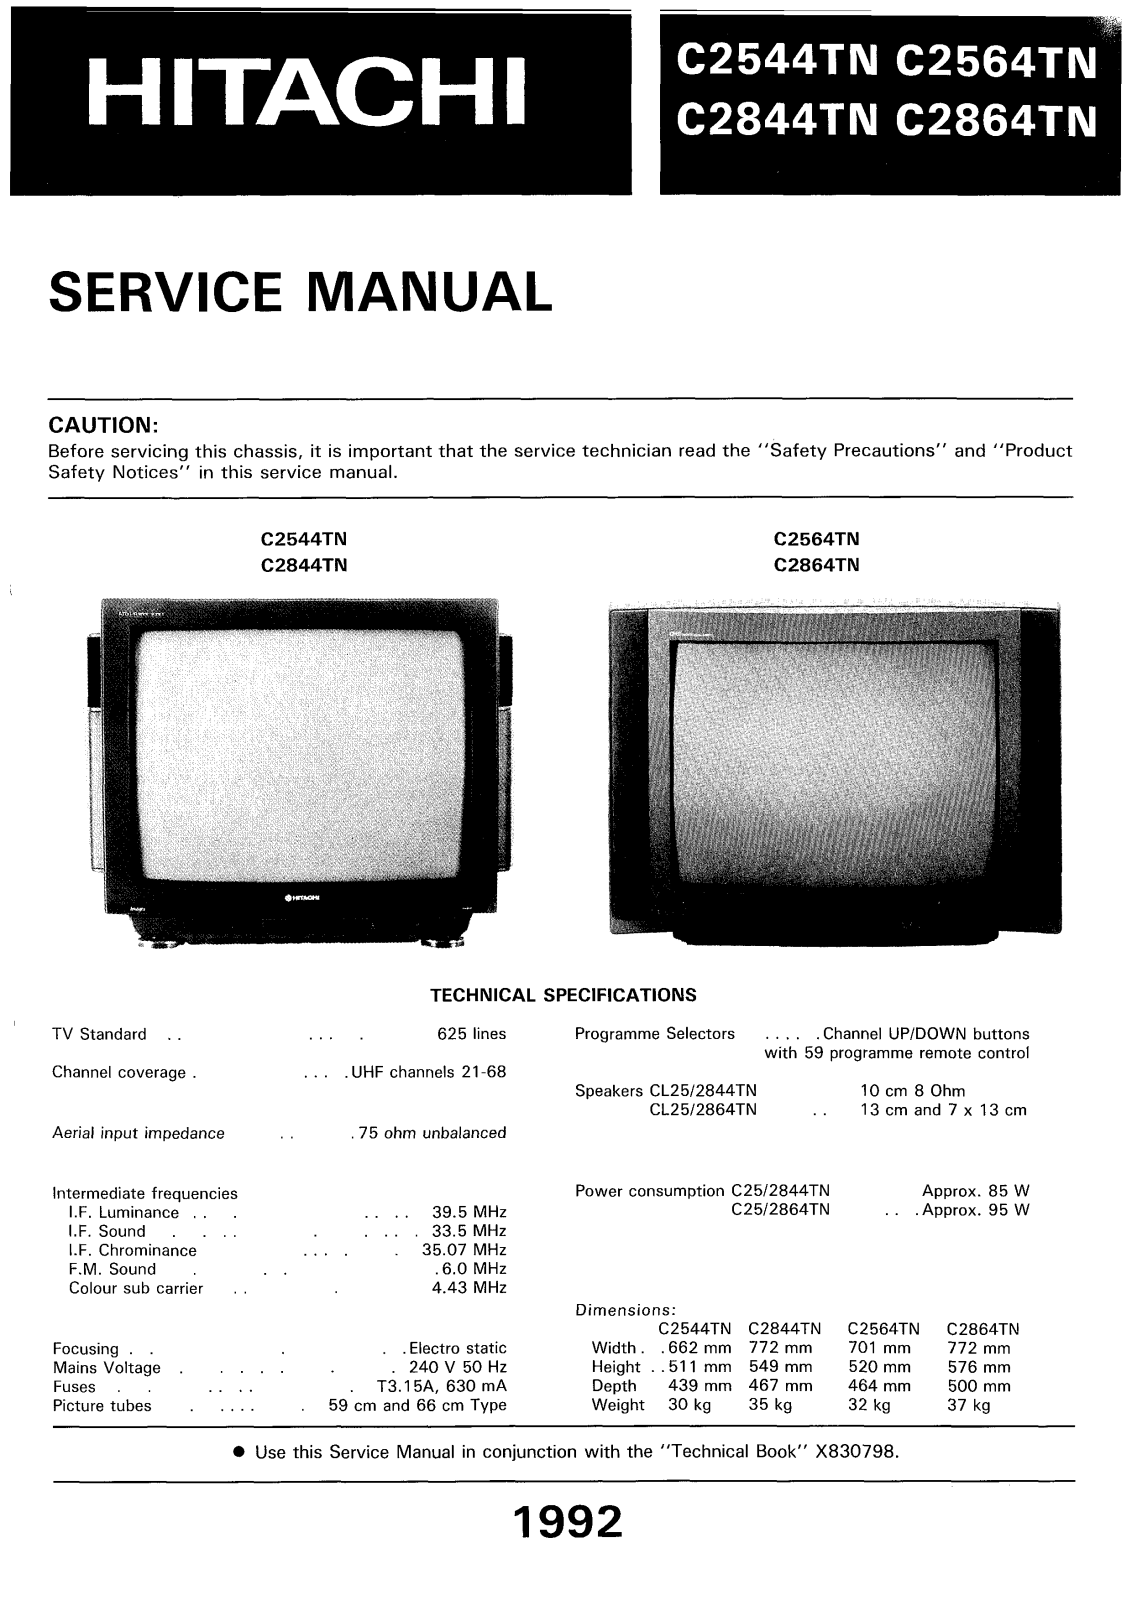 Hitachi C2544TN Service Manual